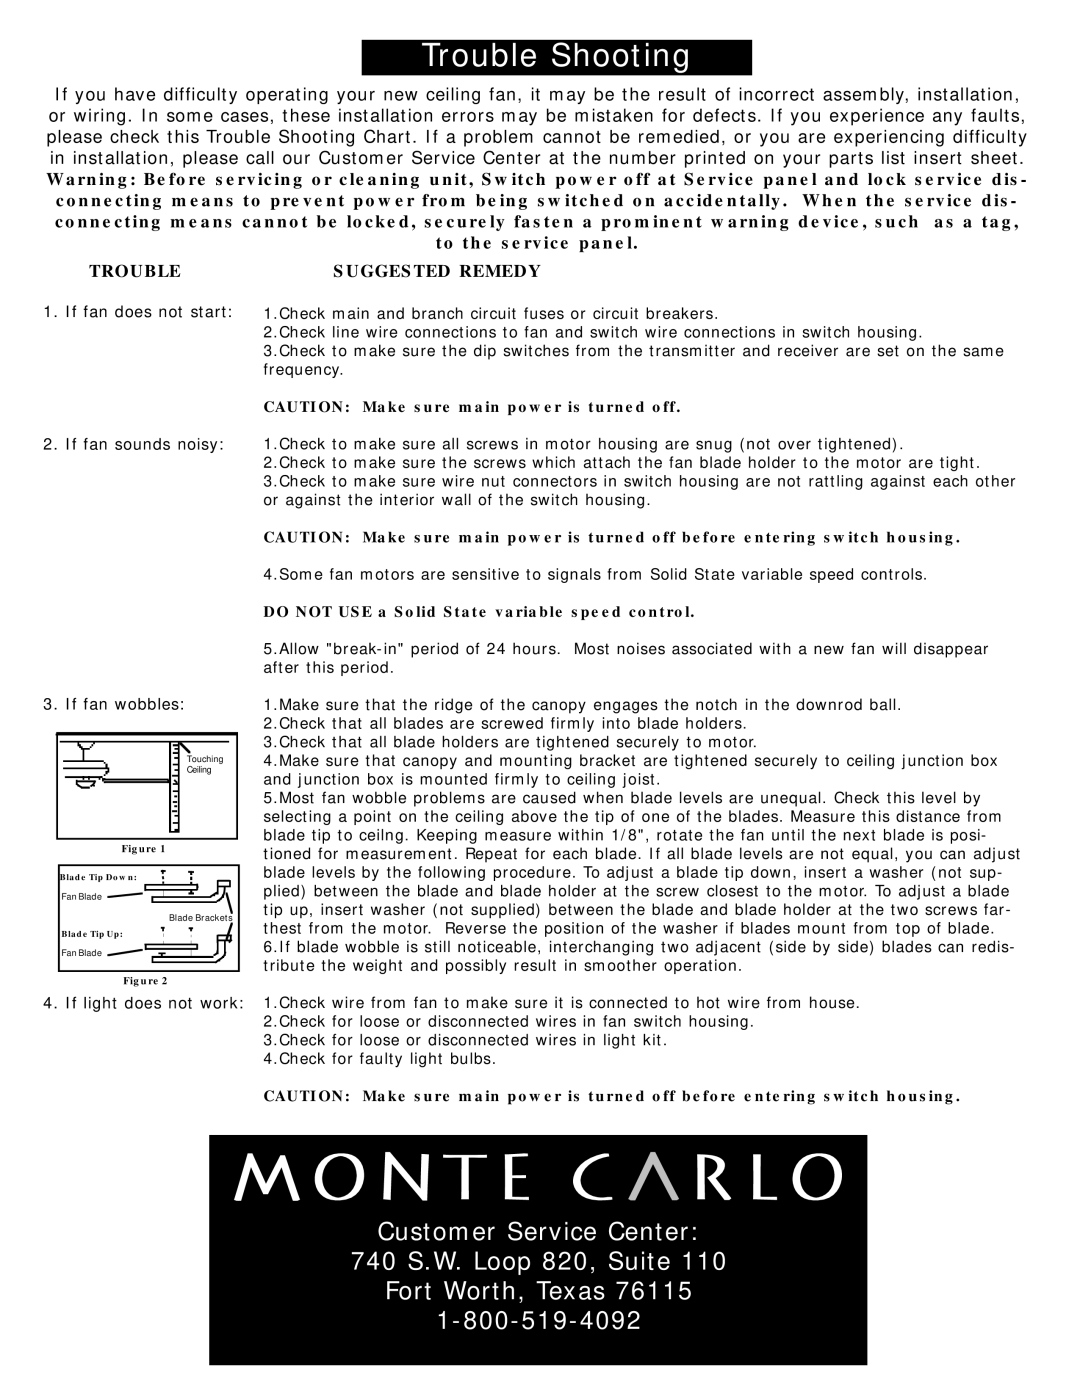 Monte Carlo Fan Company 5CZ52 Customer Service Center 740 S.W. Loop 820, Suite, Fort Worth, Texas 1-800-519-4092 